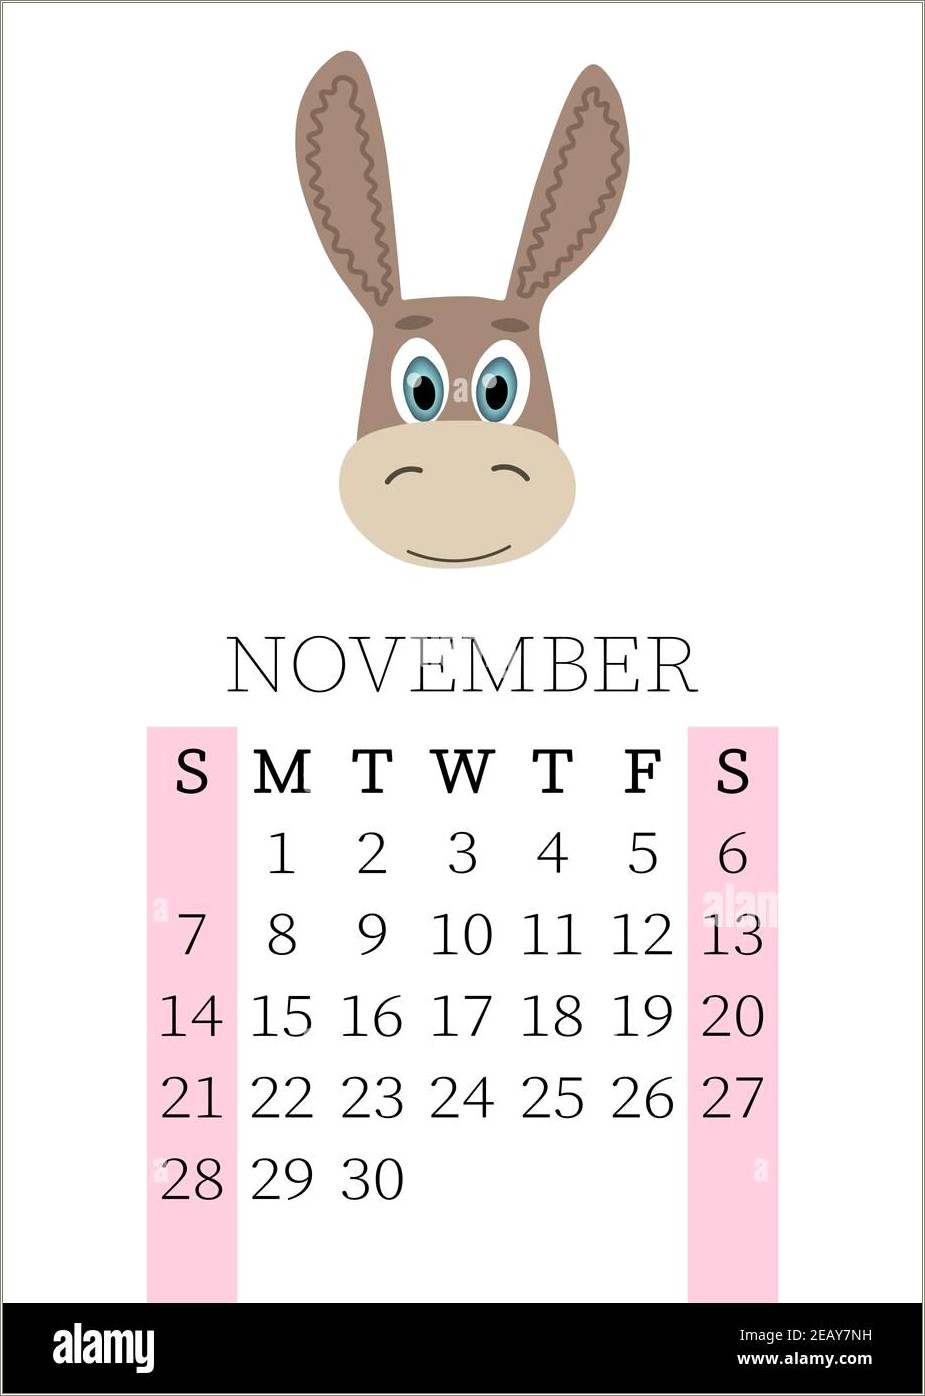 Free Monthly Calendar Template November 2018